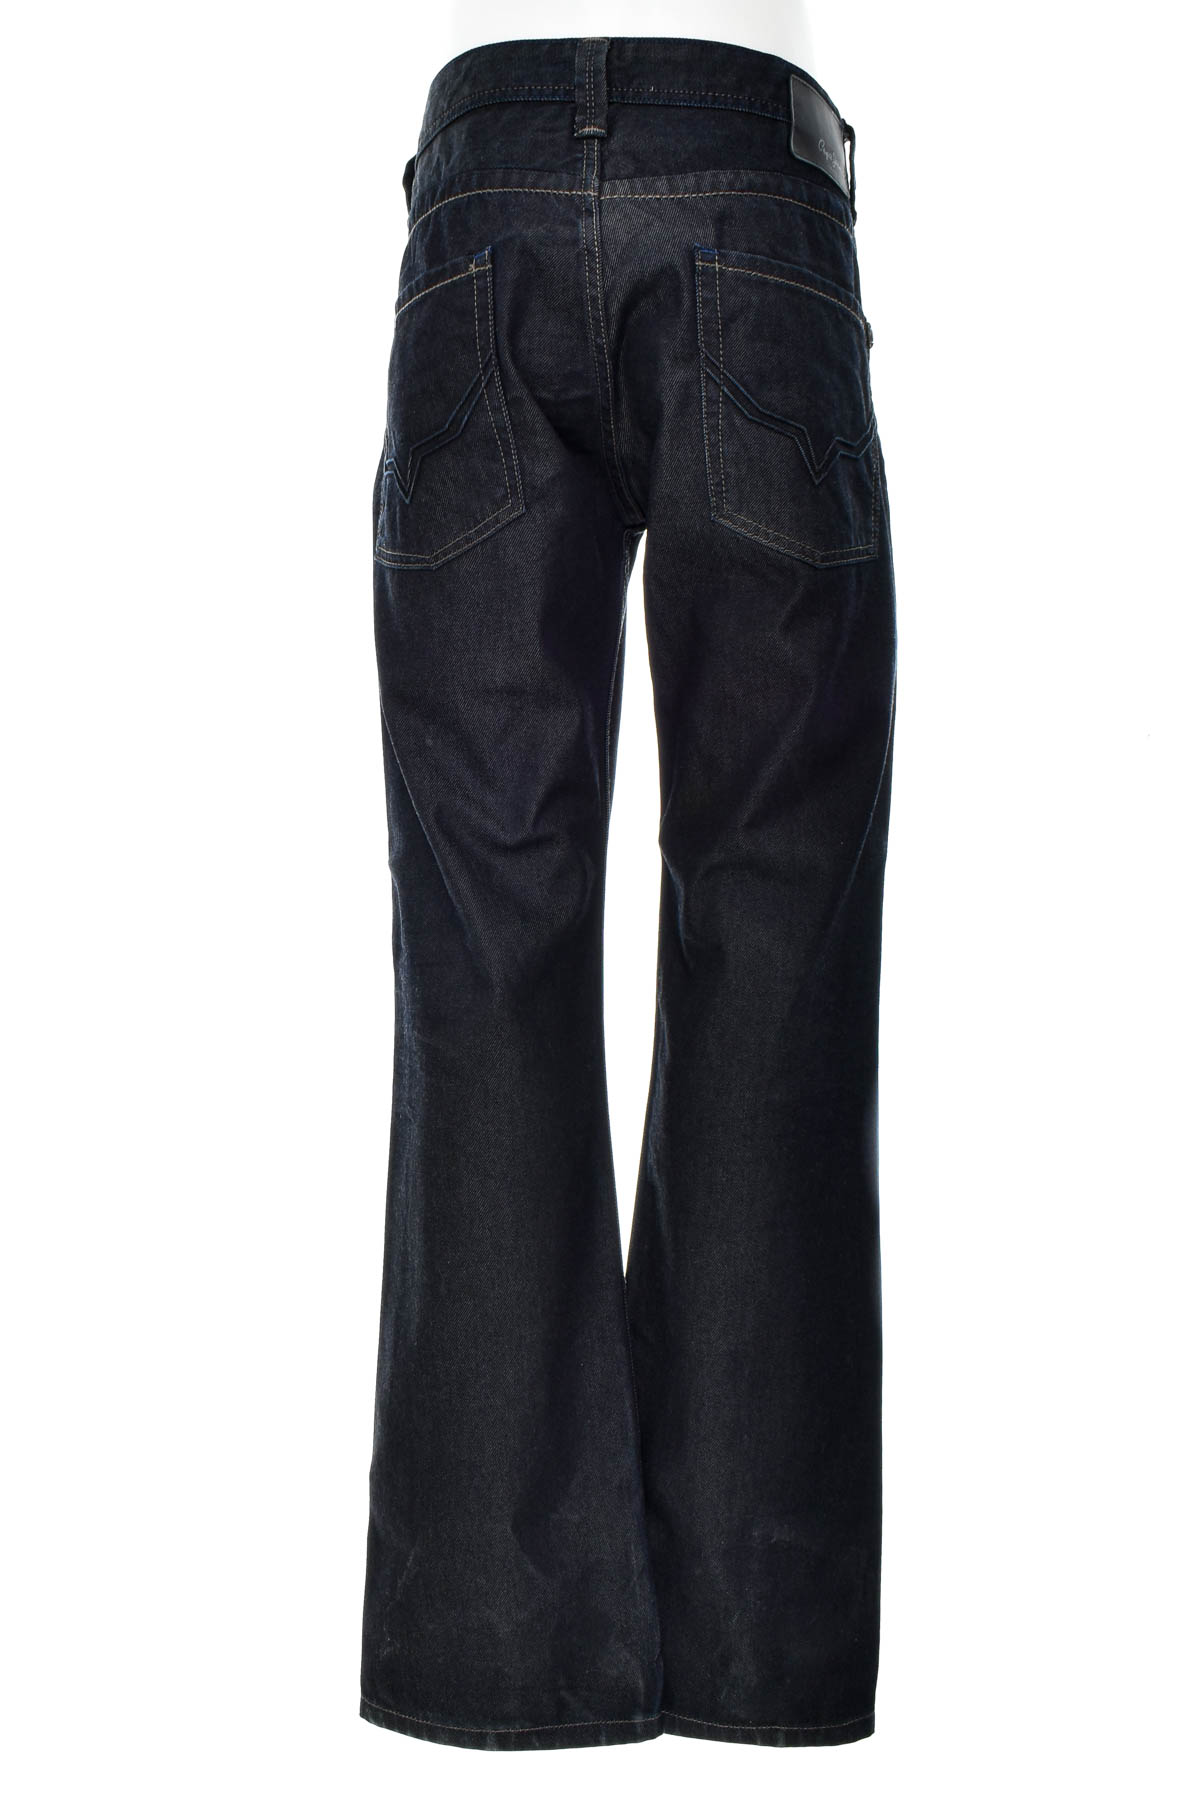 Men's jeans - Pepe Jeans - 1